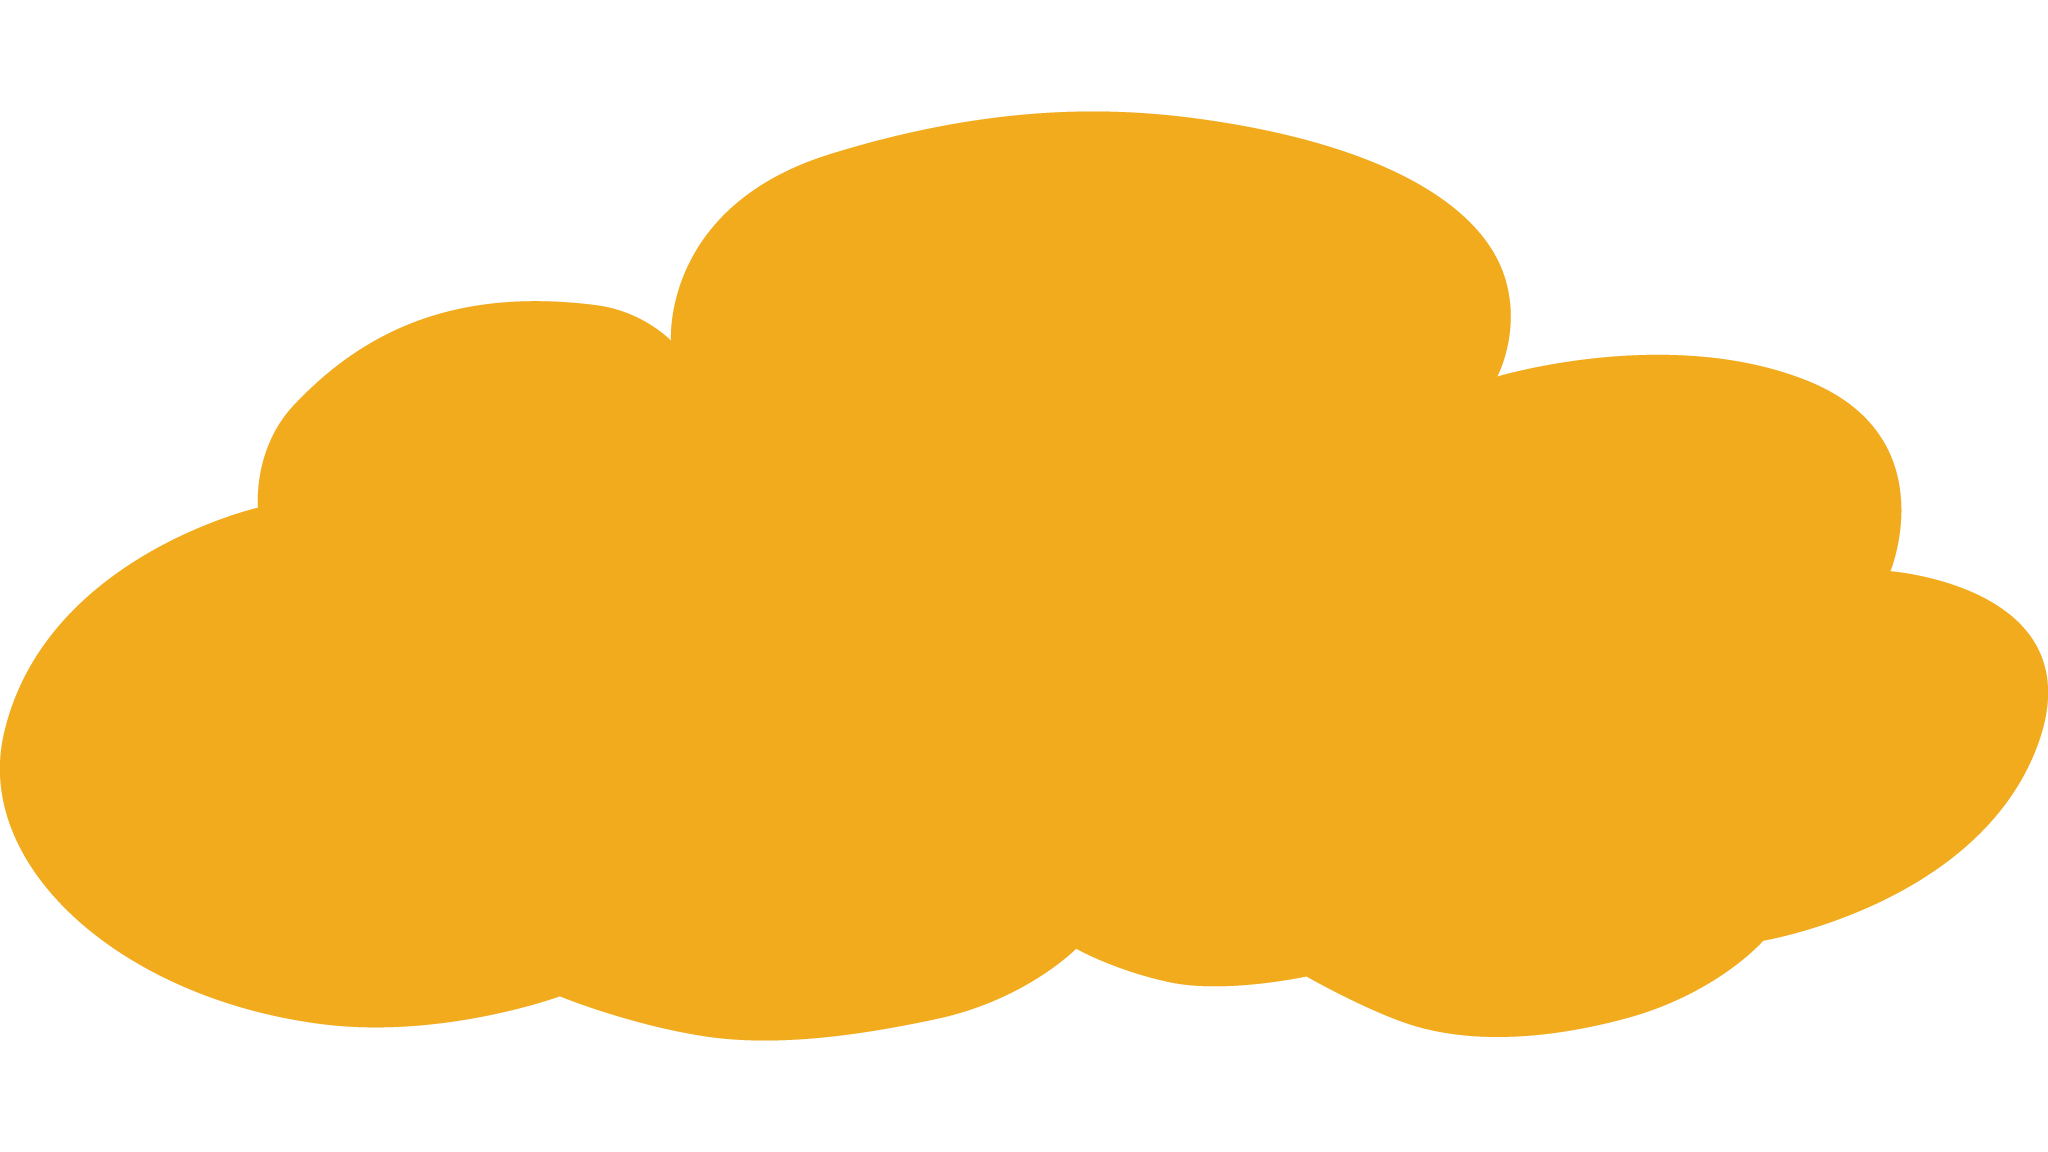 SAP HANA Cloud Platform